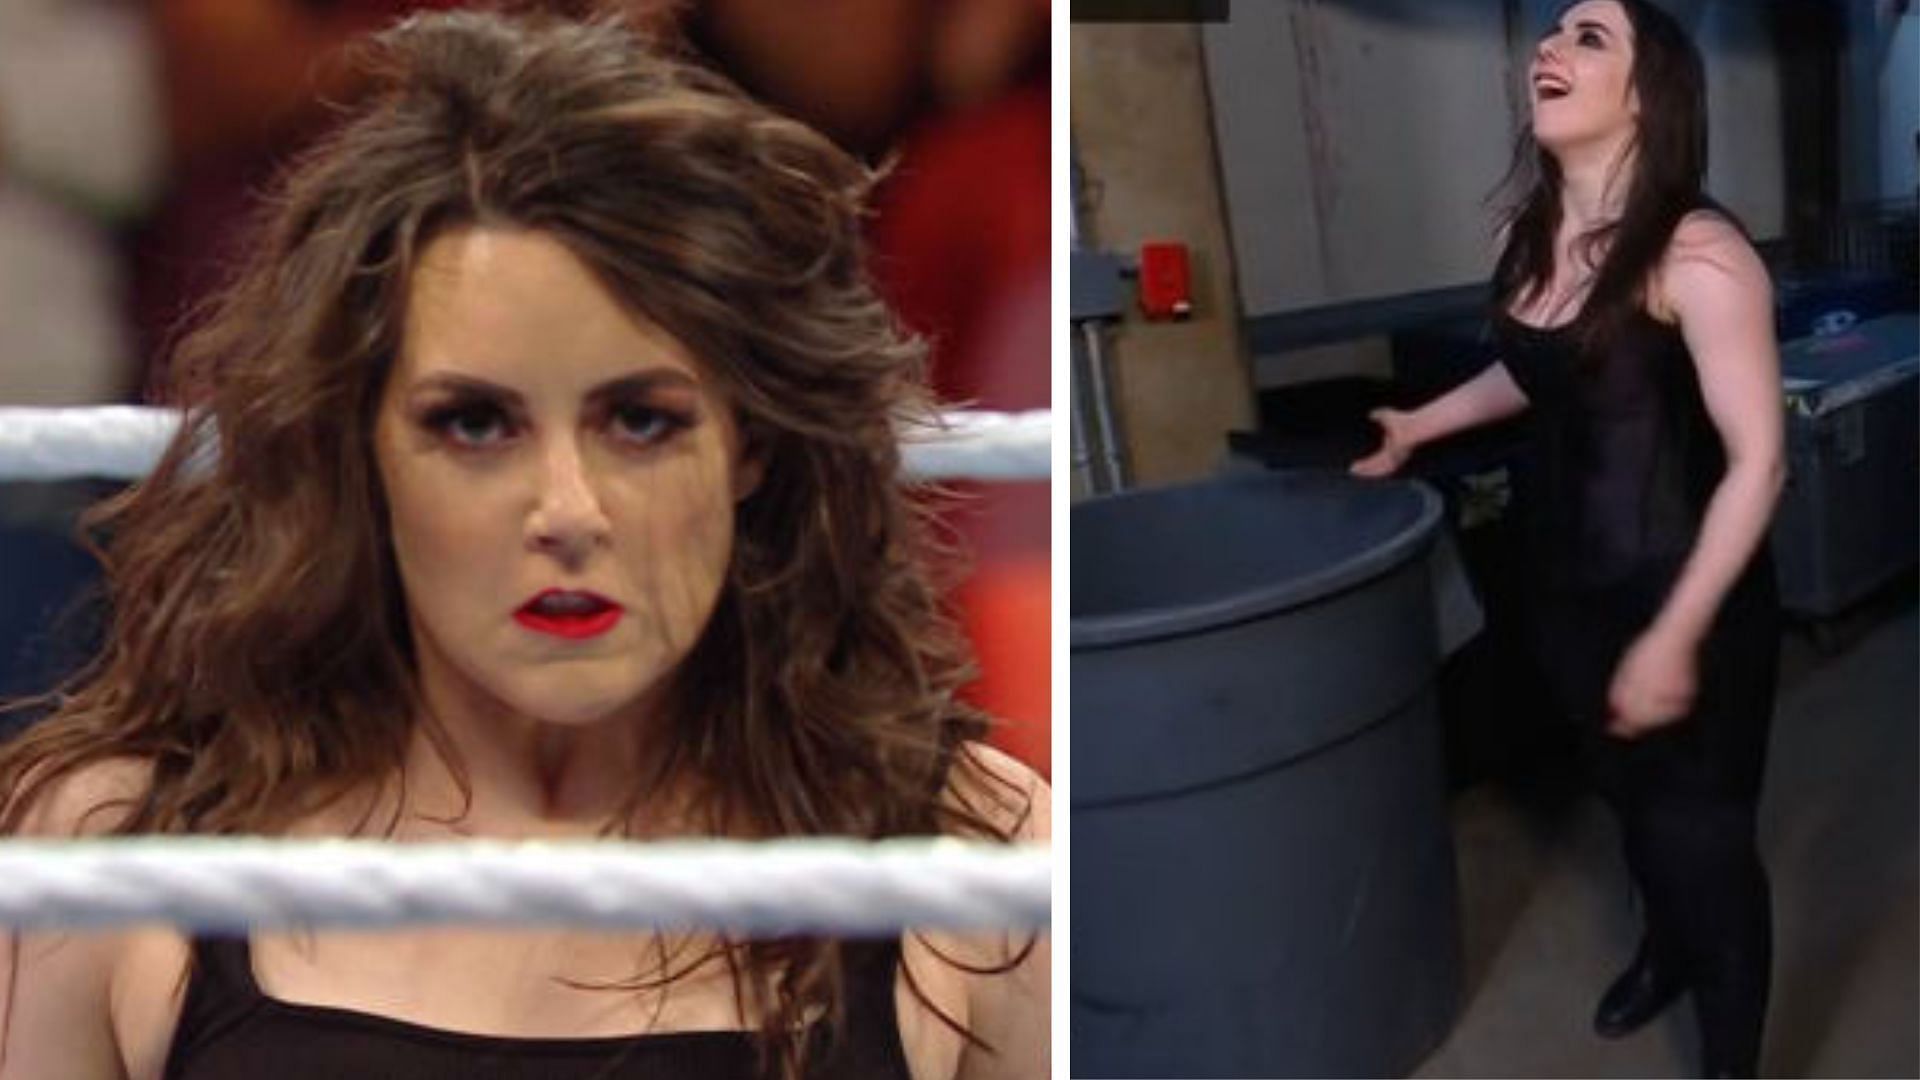 Nikki Cross threw the 24/7 Championship in the trash last night on WWE RAW.